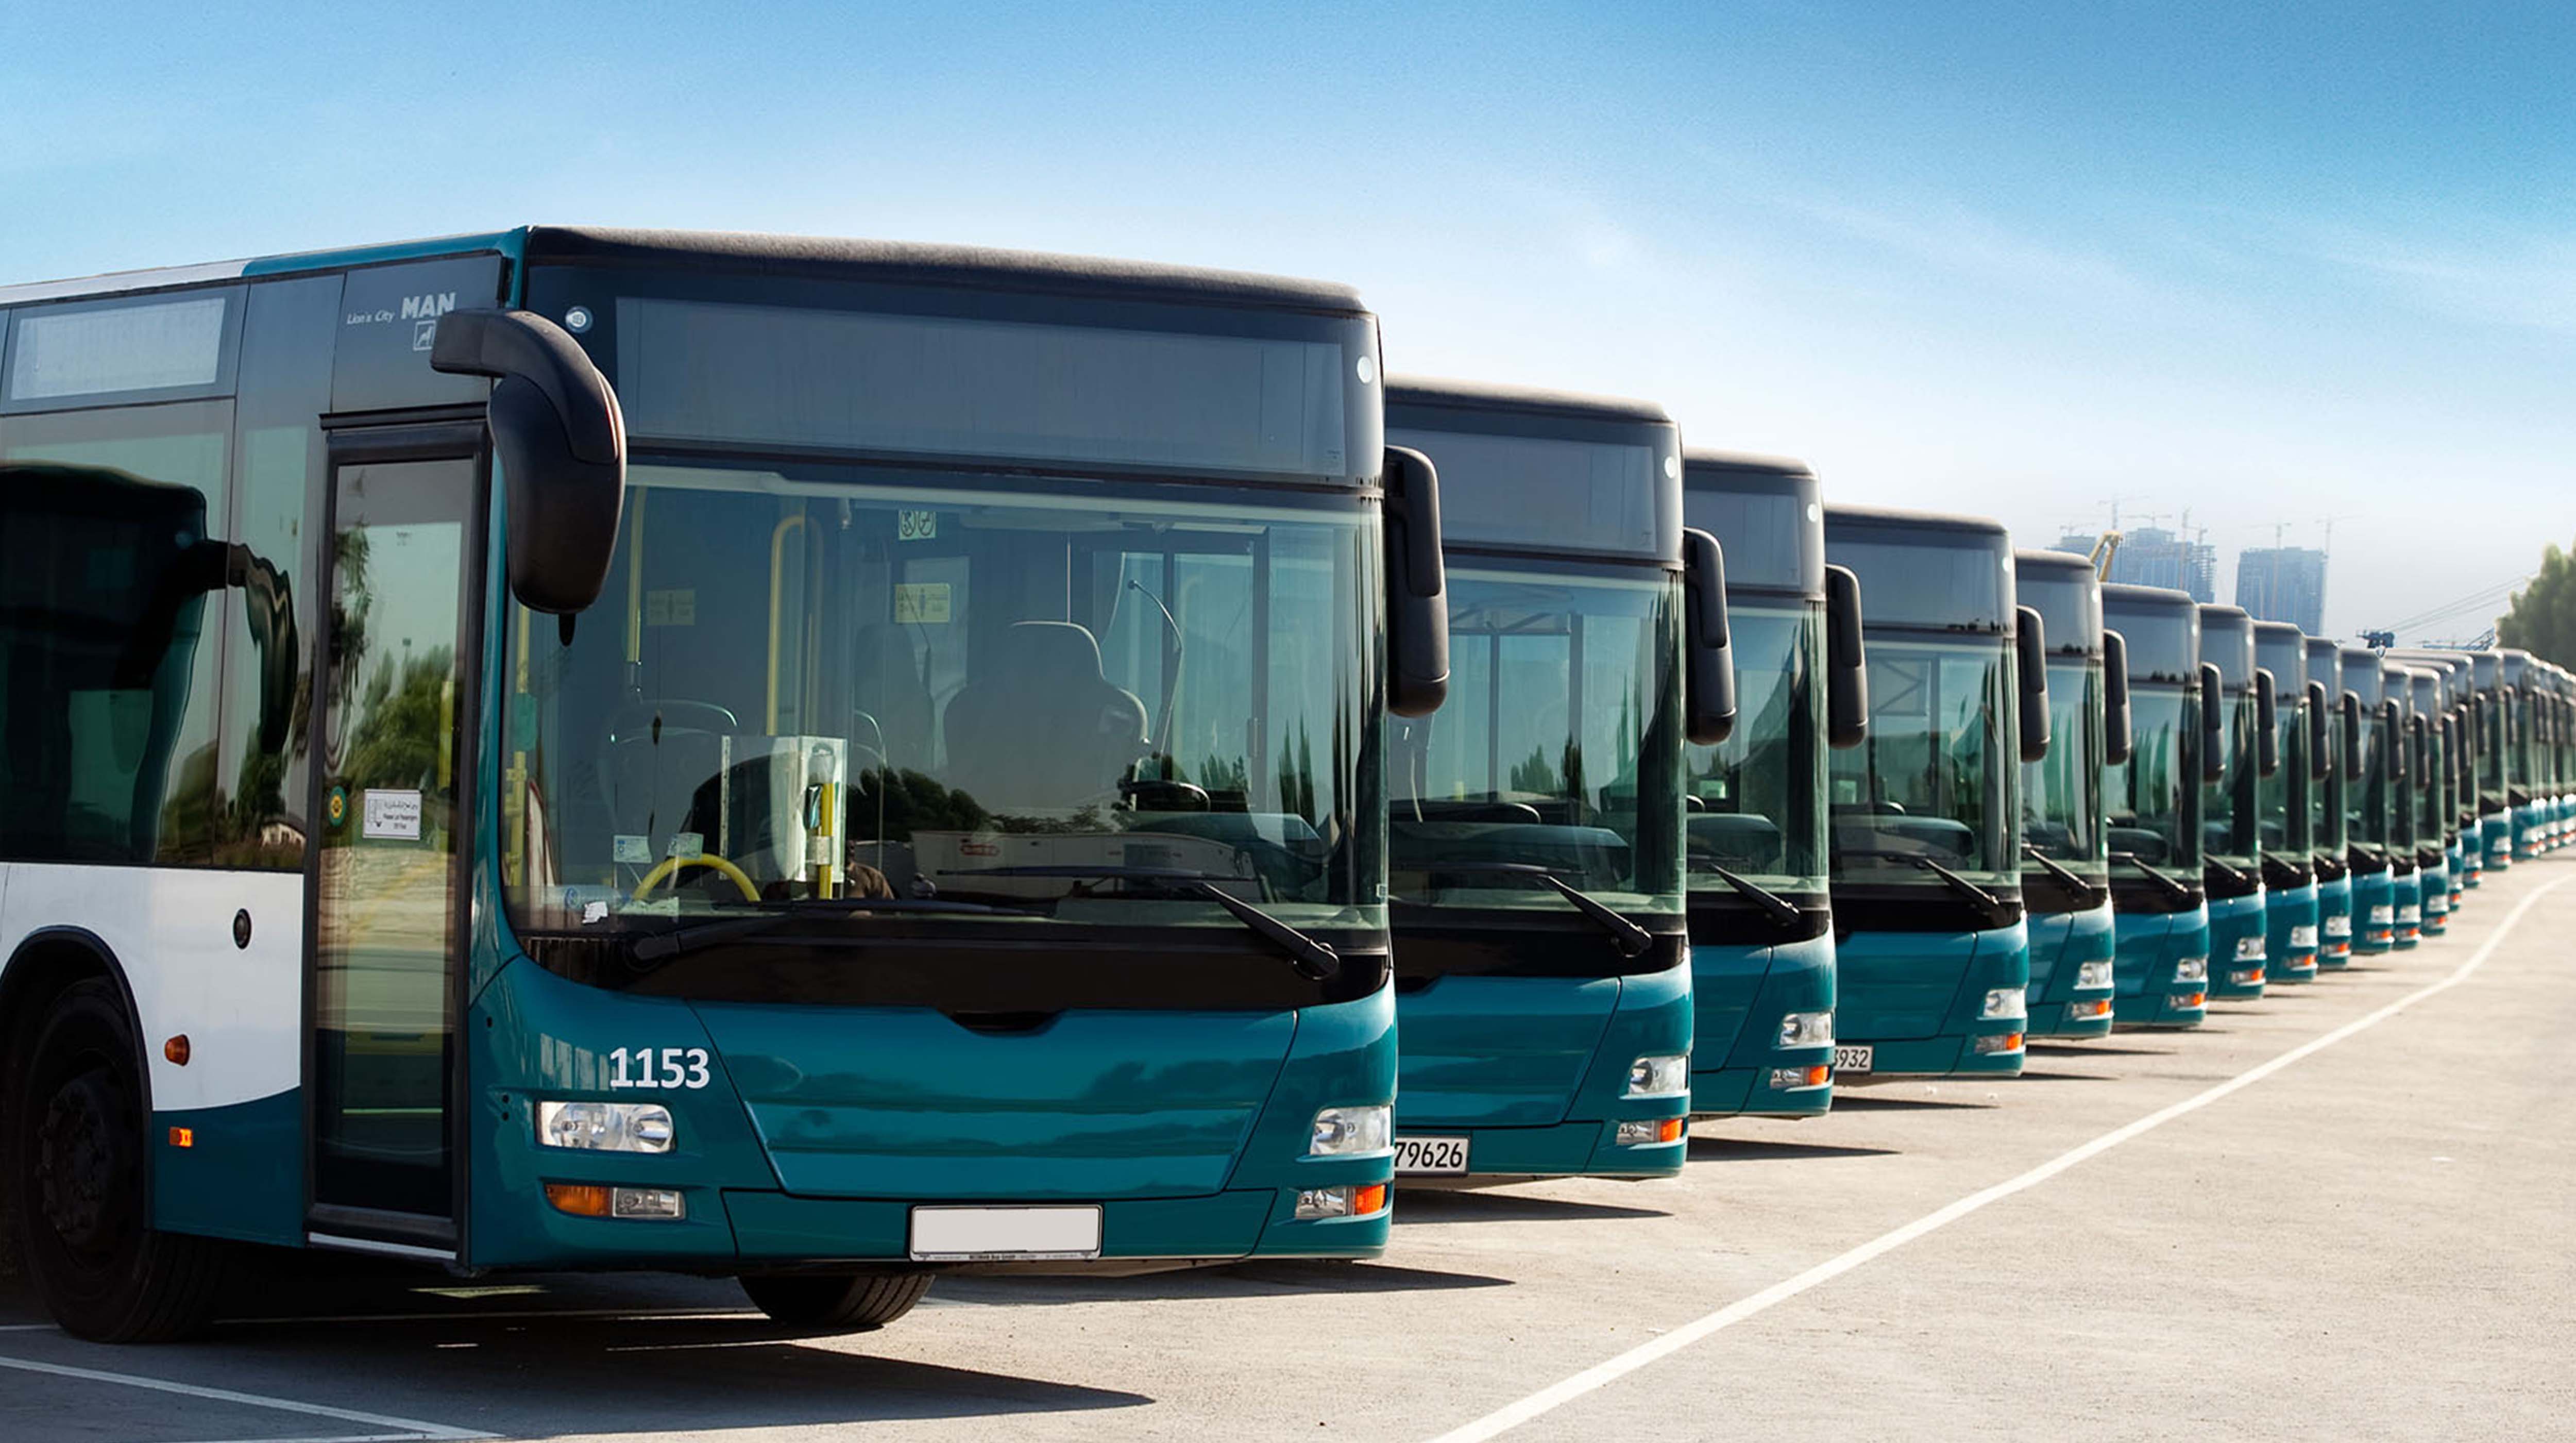 A fleet of Abu Dhabi's public buses